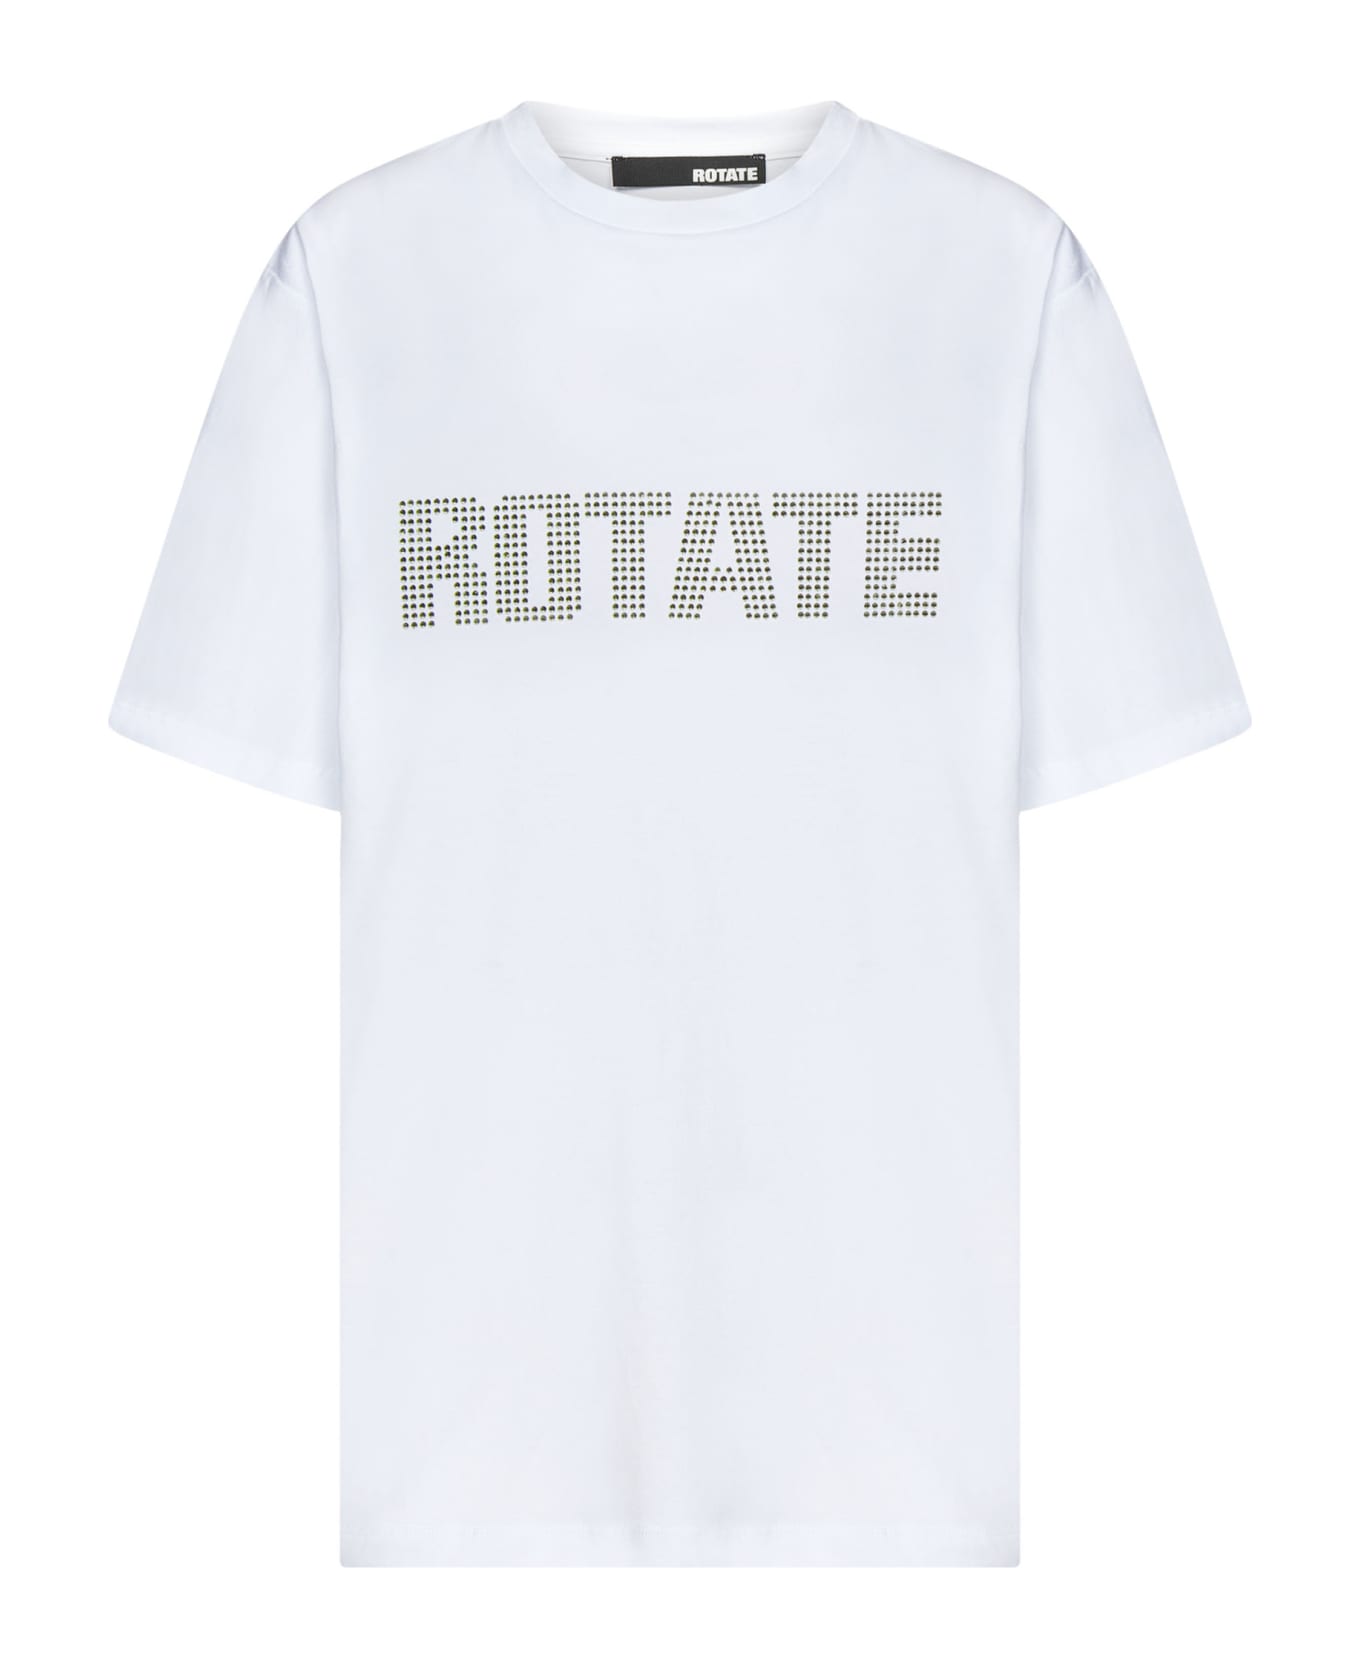 Rotate by Birger Christensen Rotate T-shirt - BIANCO